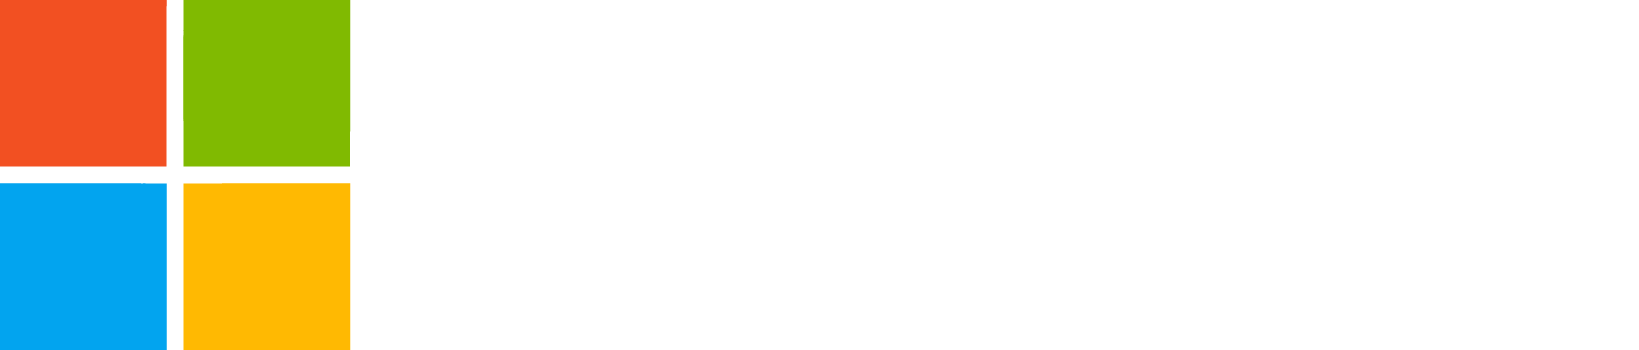 Micorsoft Logo